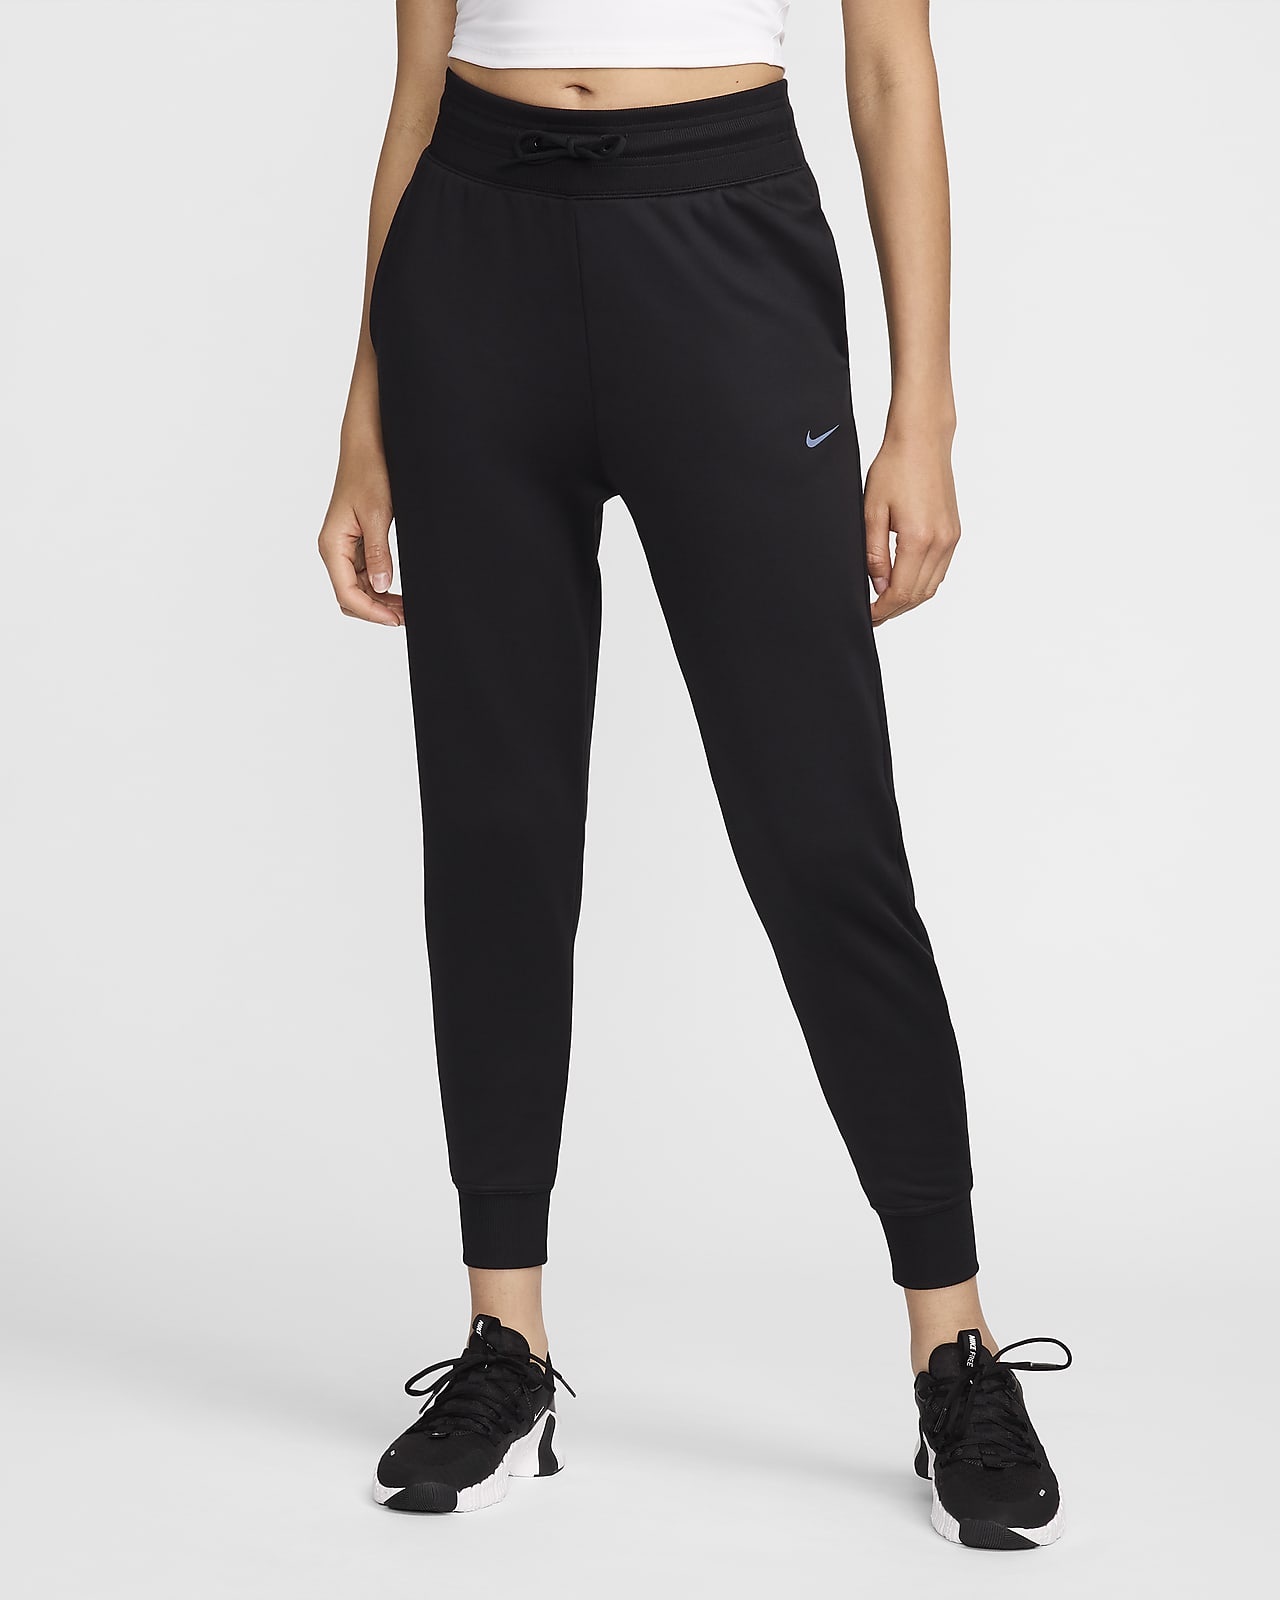 Nike Pro Training therma warm tights in black